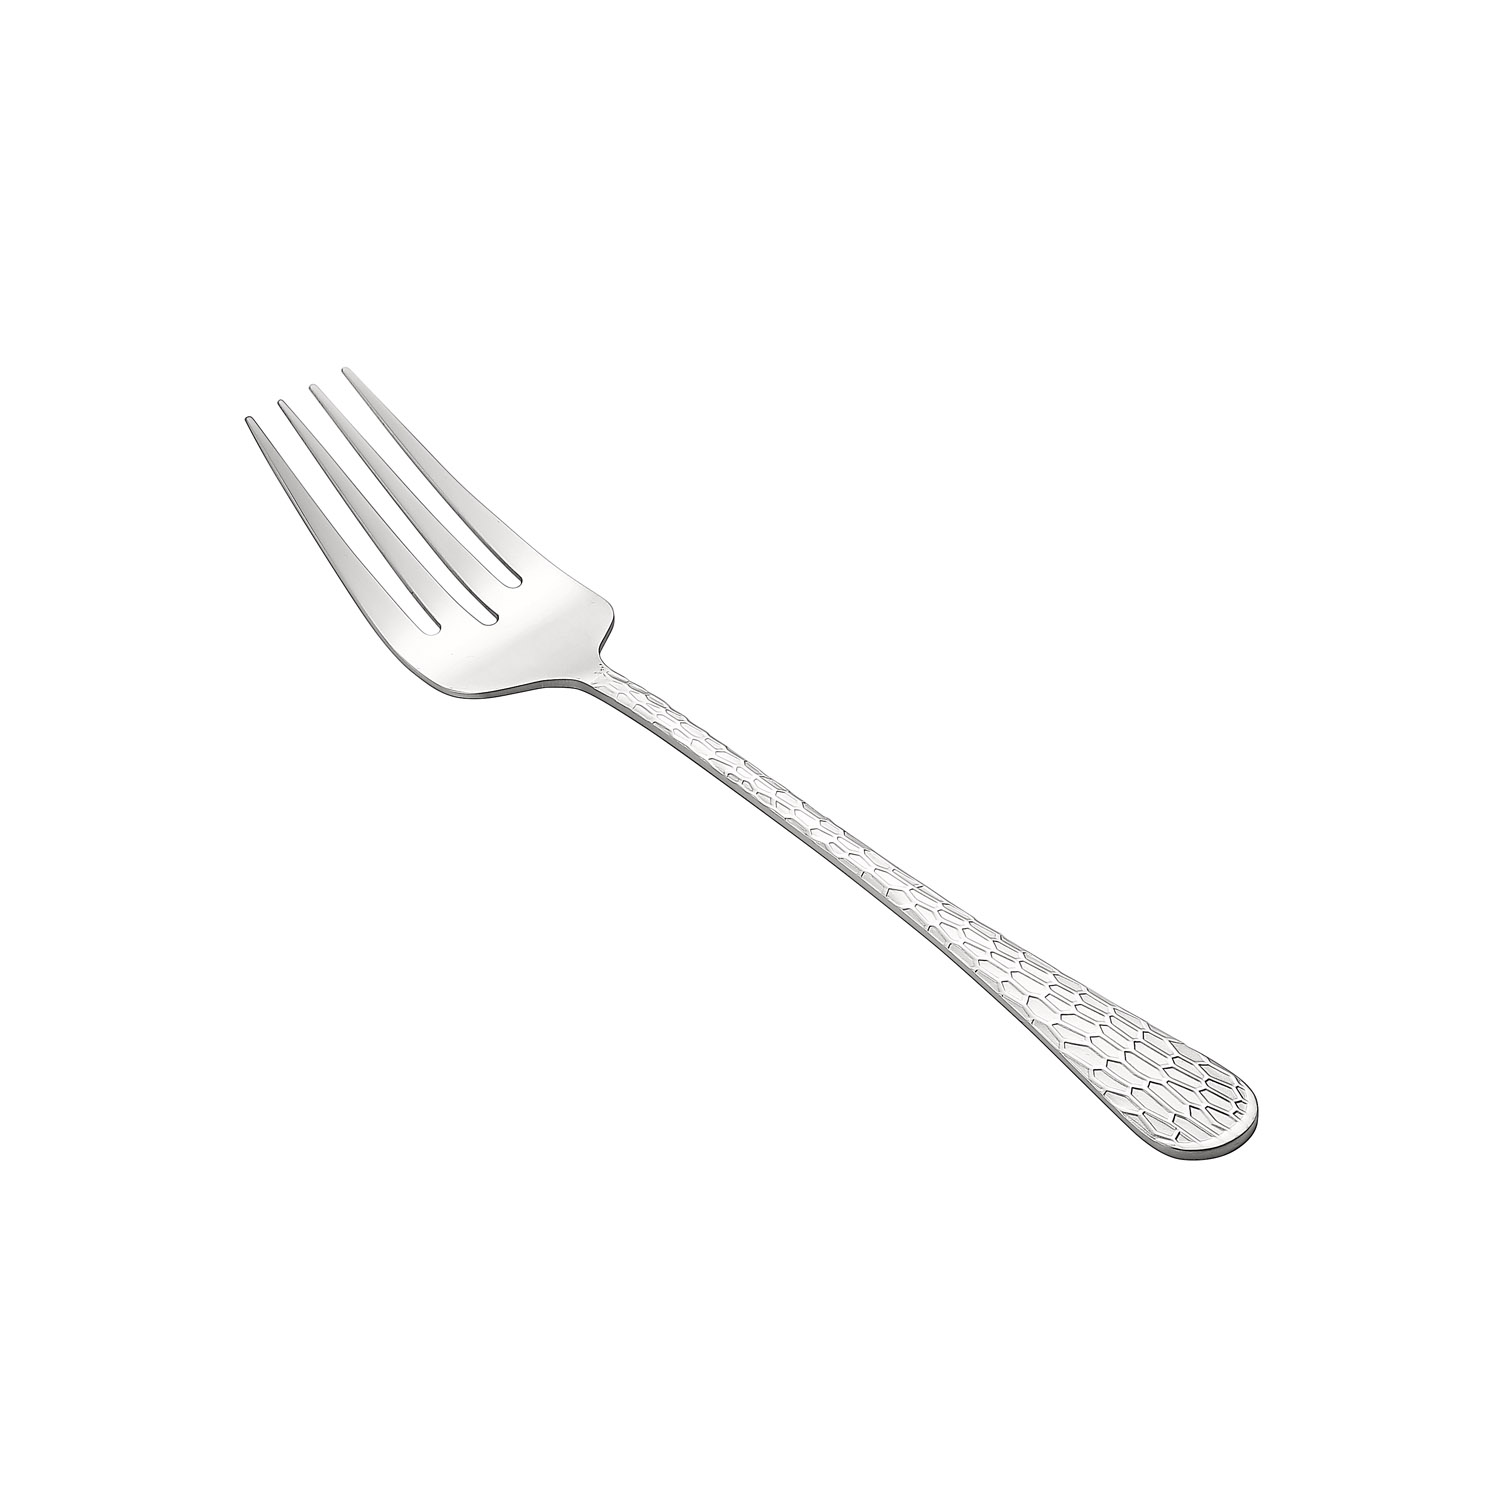 CAC China 8015-21 Auspicious Banquet Fork, Extra Heavy Weight 18/8, 12" - 1 dozen